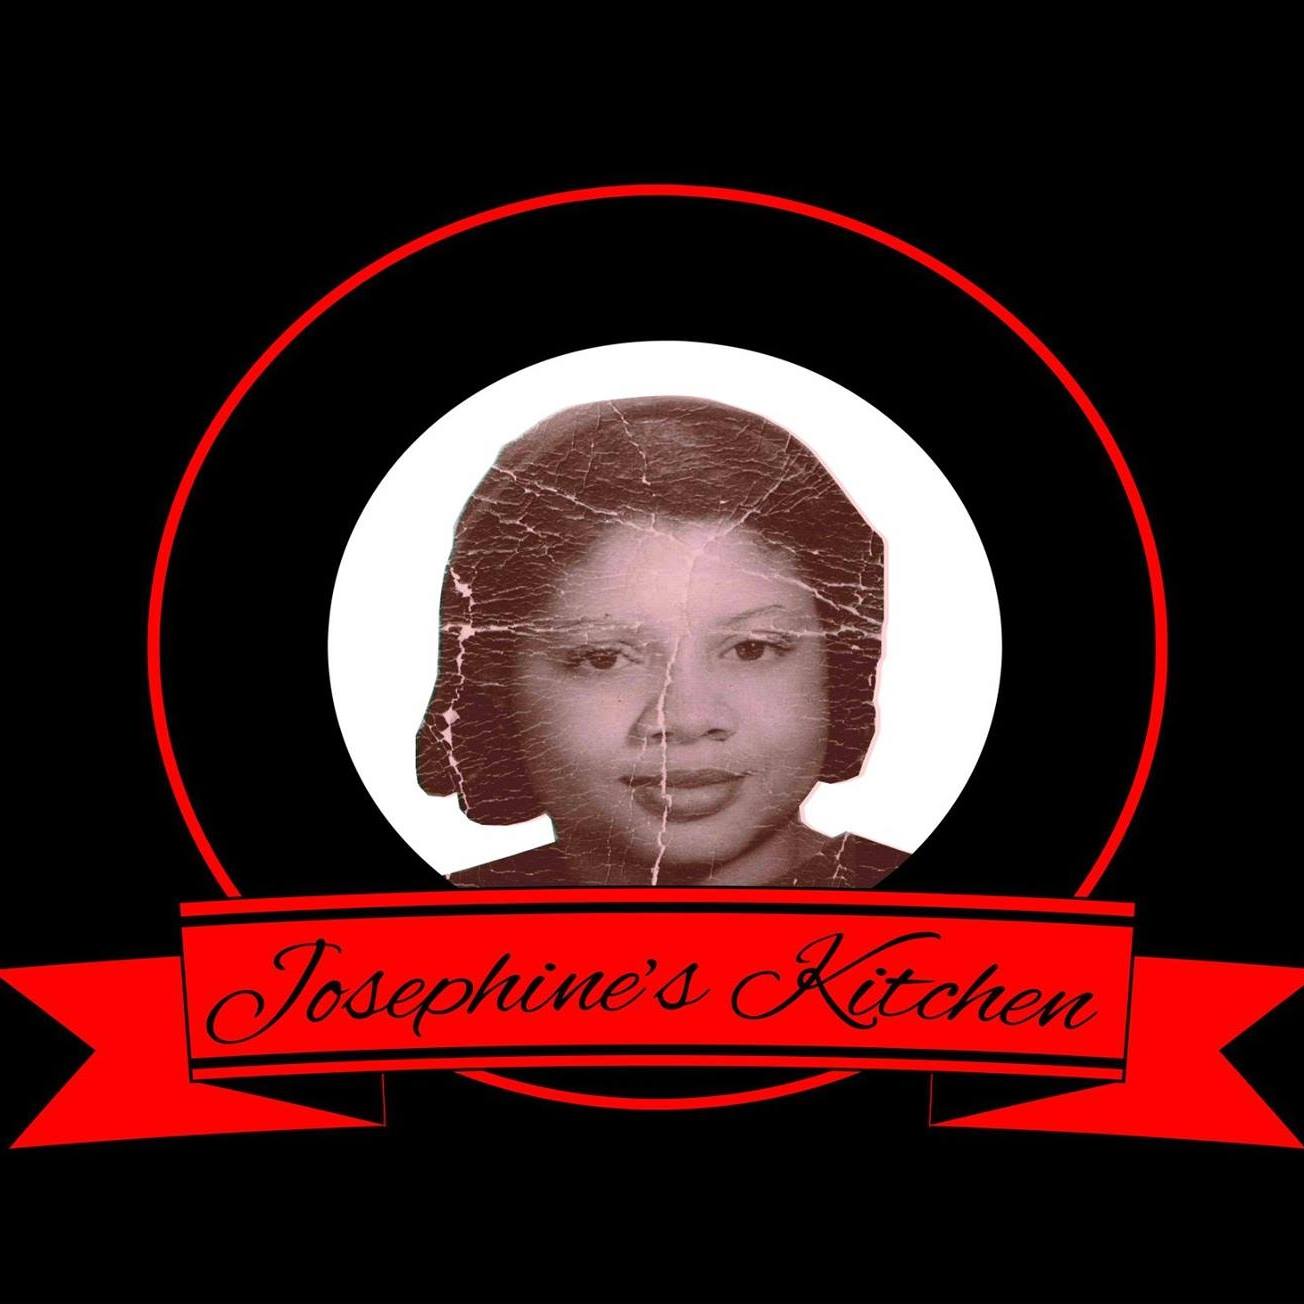 Josephine Kitchen